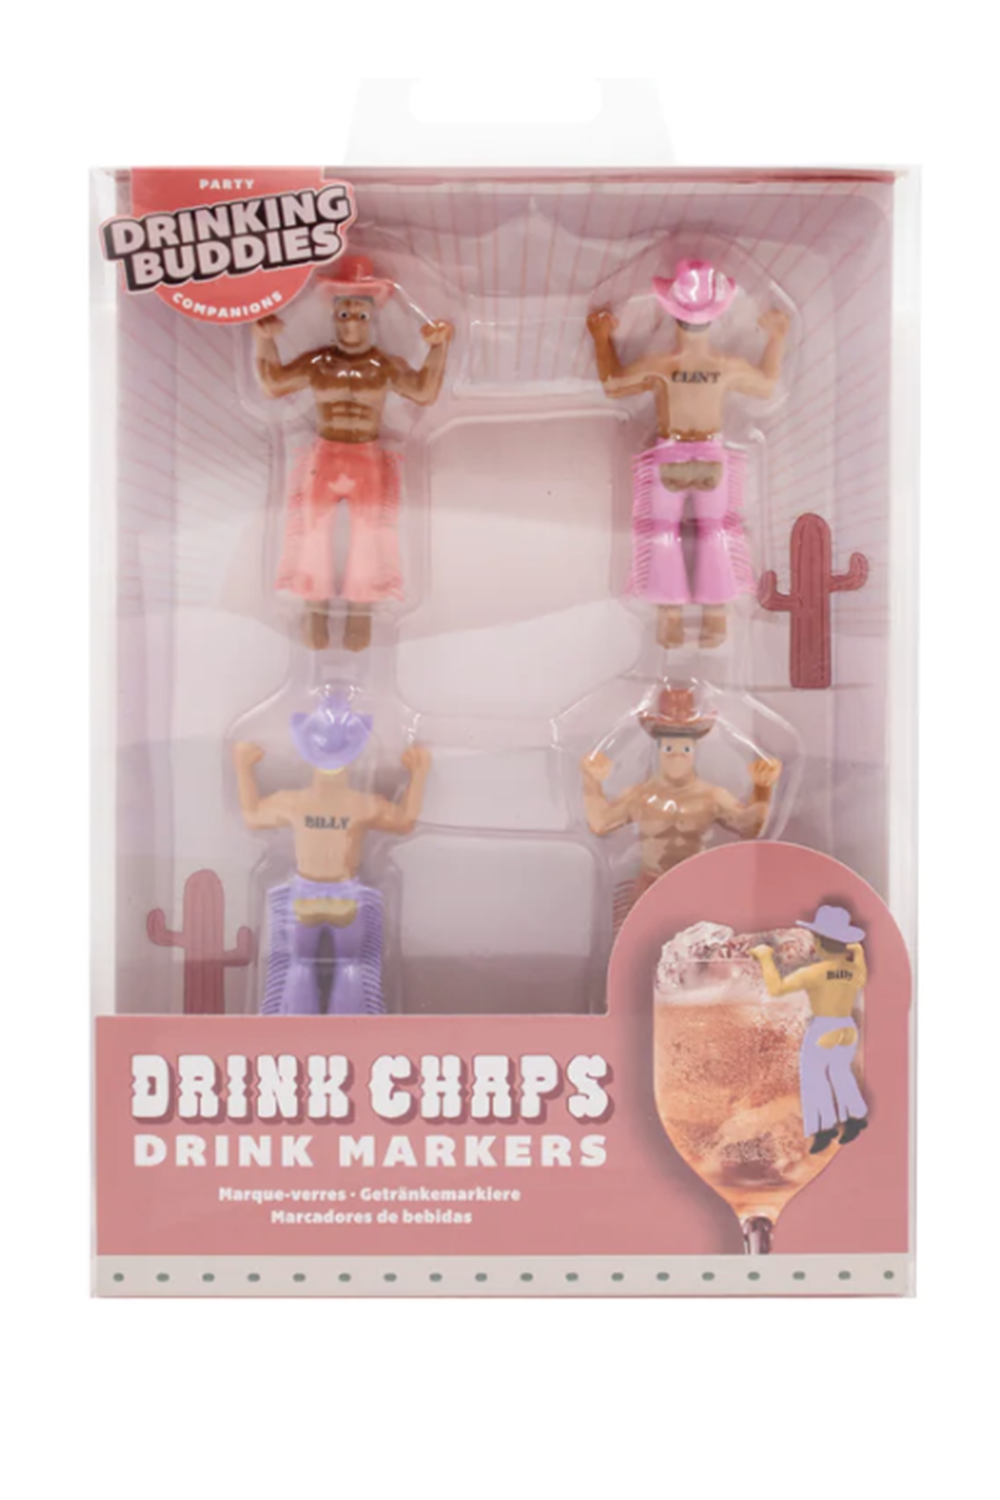 Drinking Buddies - Chaps